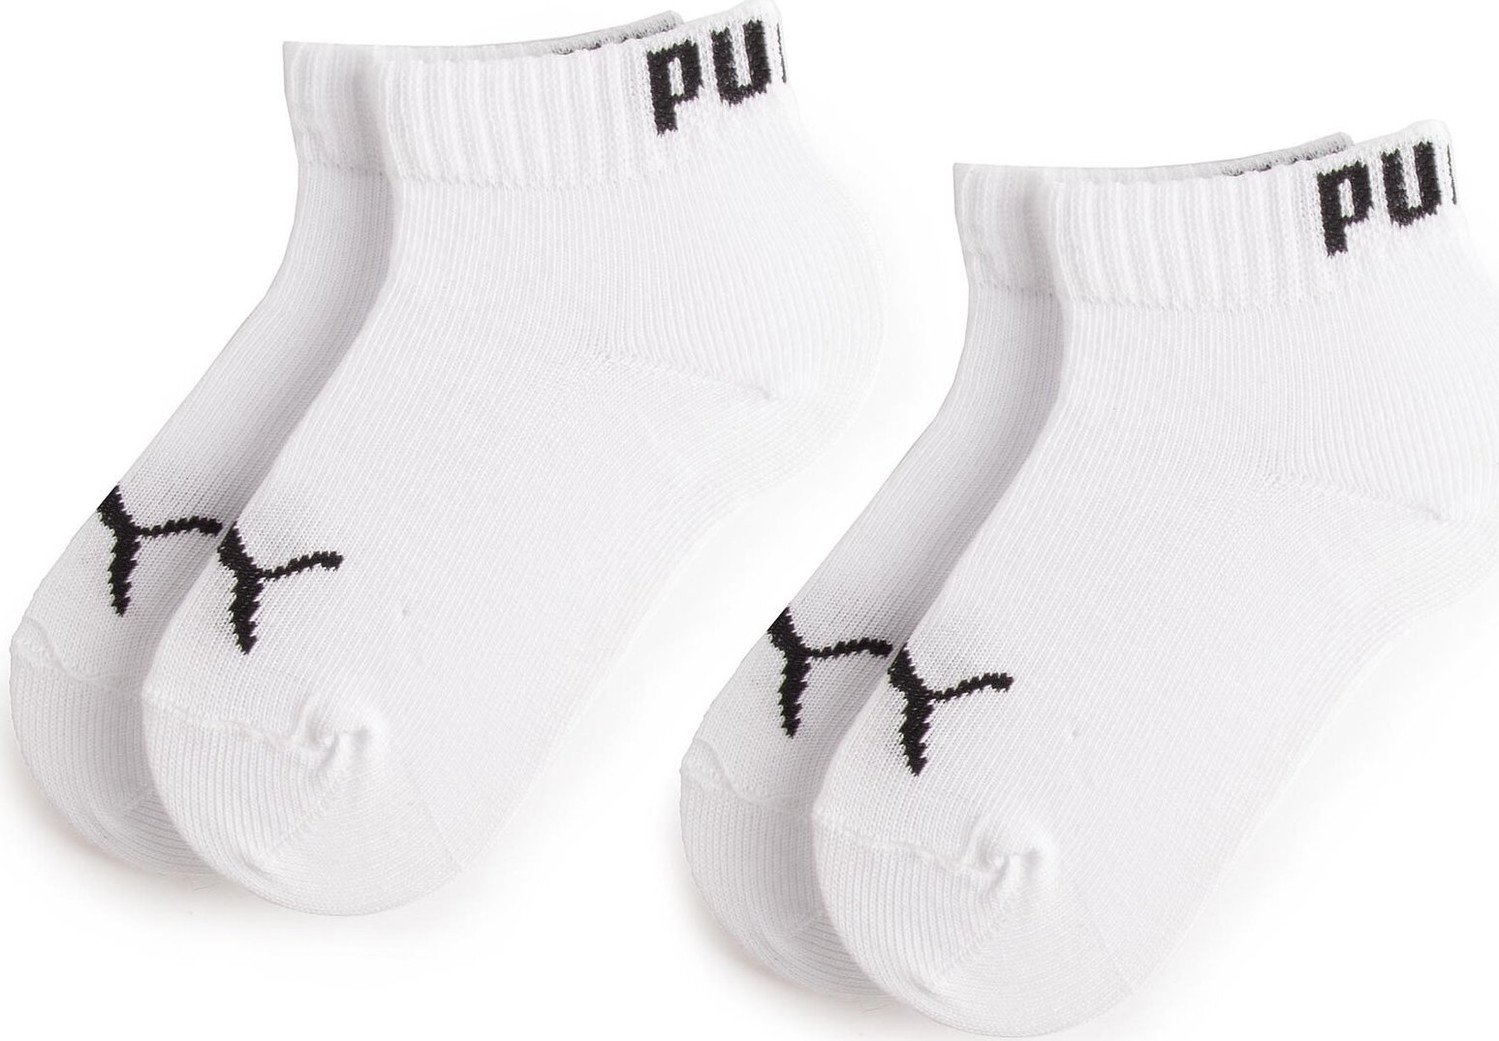 Sada 2 párů dětských nízkých ponožek Puma 194011001 White 300